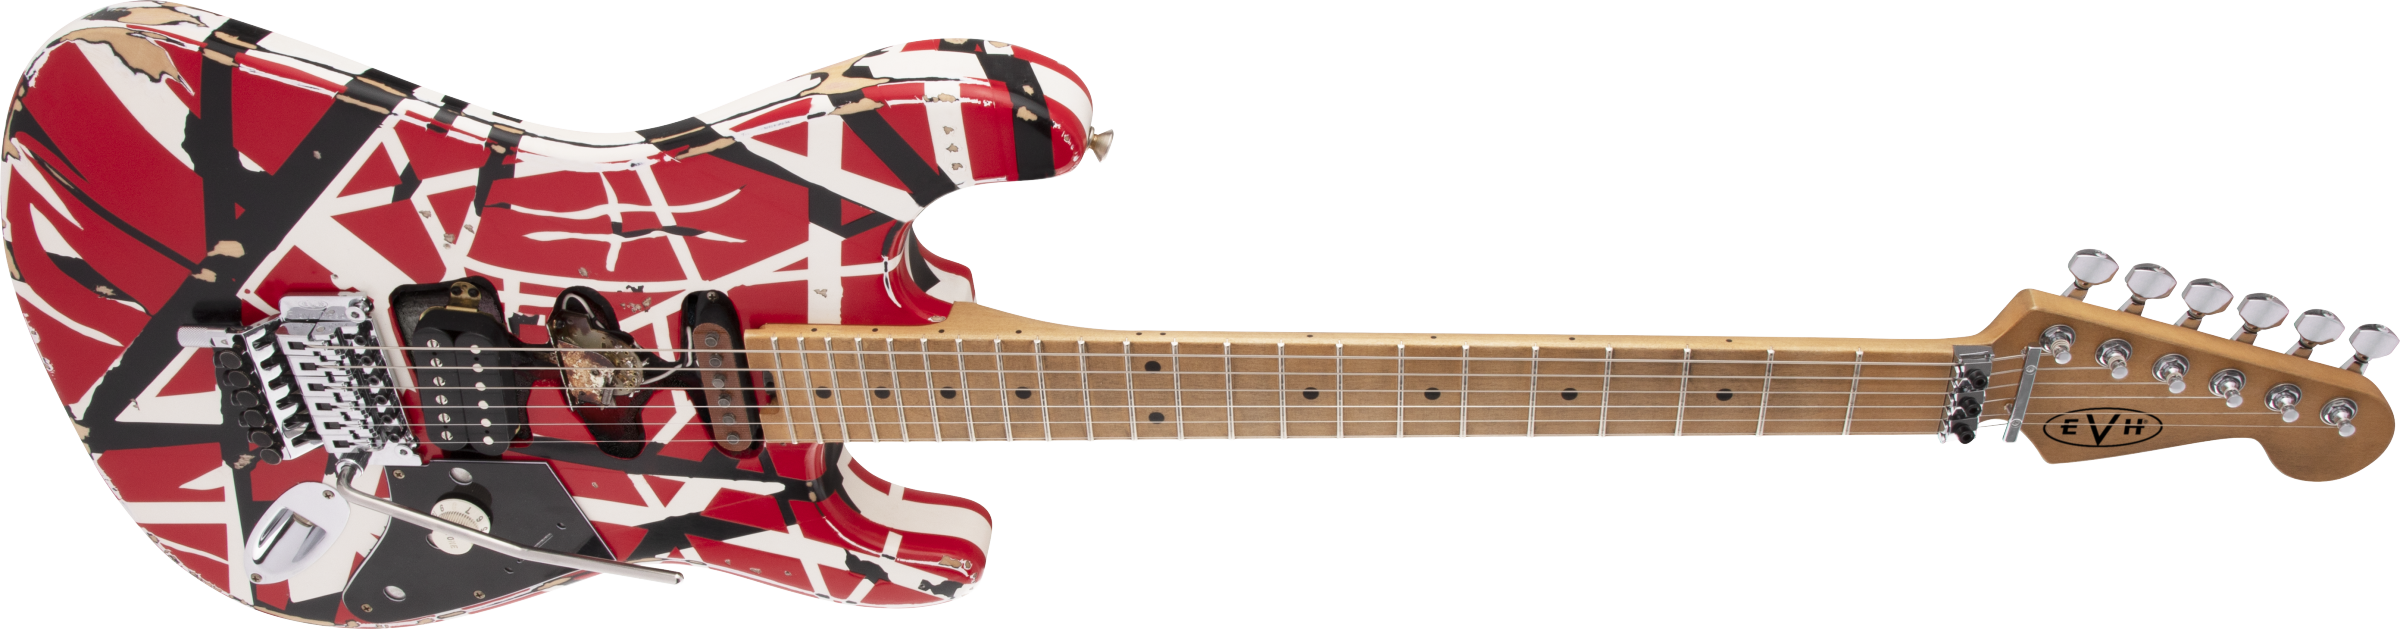 Evh Eddie Van Halen Frankenstein Frankie Striped Series Mex H Fr Mn - Red With Black & White Stripes - Str shape electric guitar - Variation 3